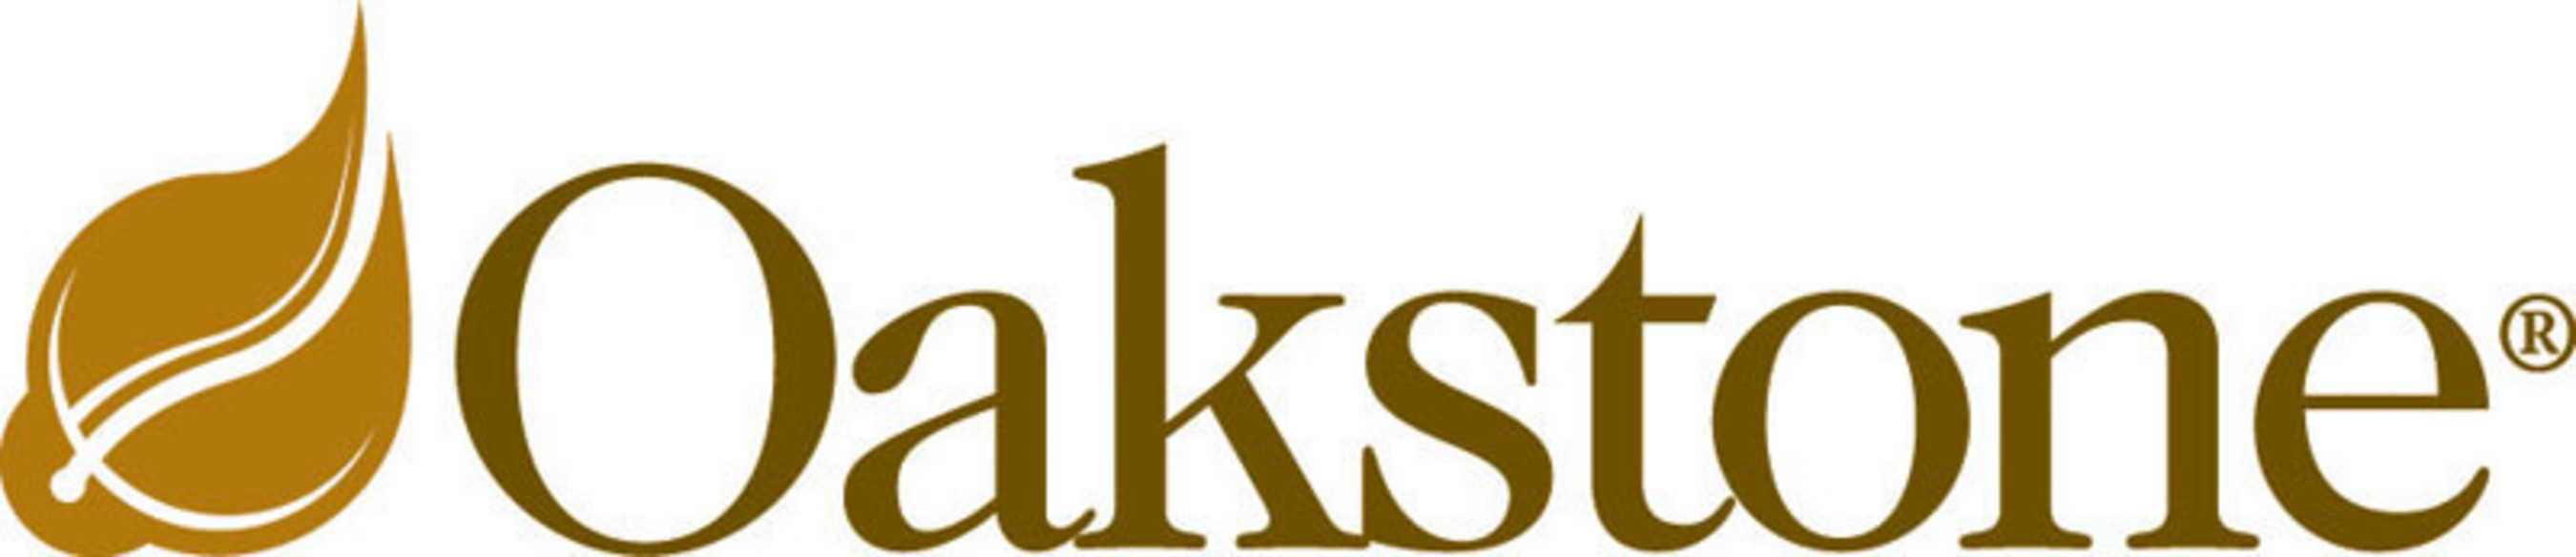 Oakstone Logo. (PRNewsFoto/Oakstone Publishing) (PRNewsFoto/OAKSTONE PUBLISHING)